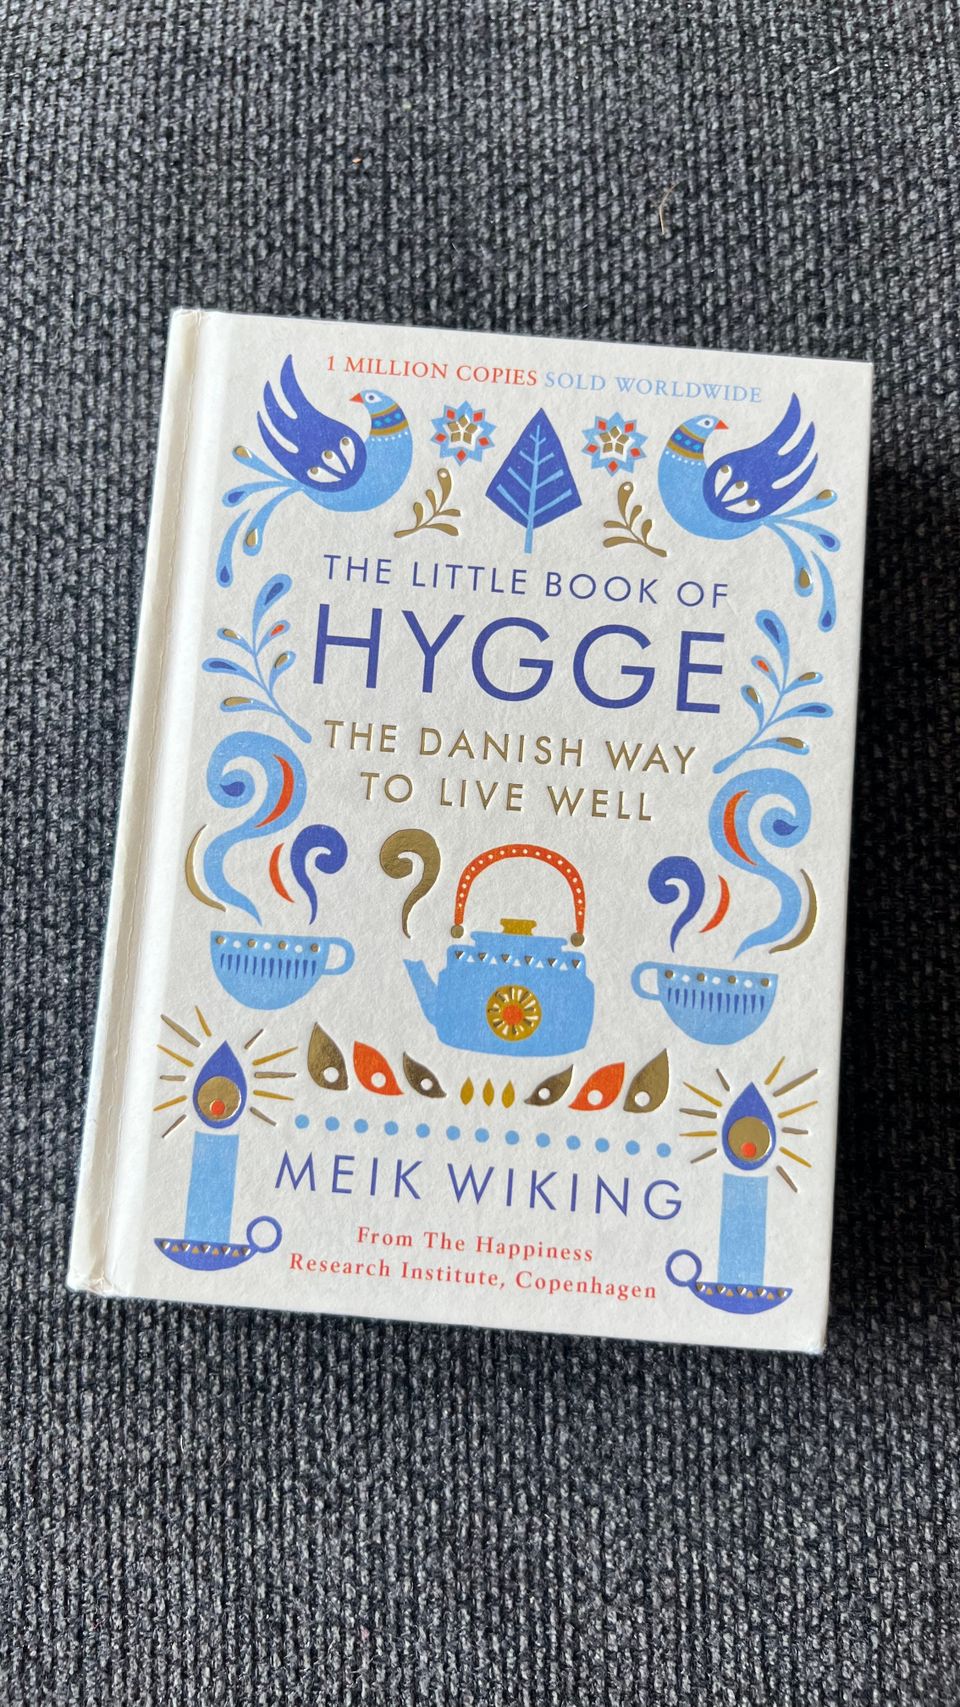 "The little book of Hygge" by Meik Wiking